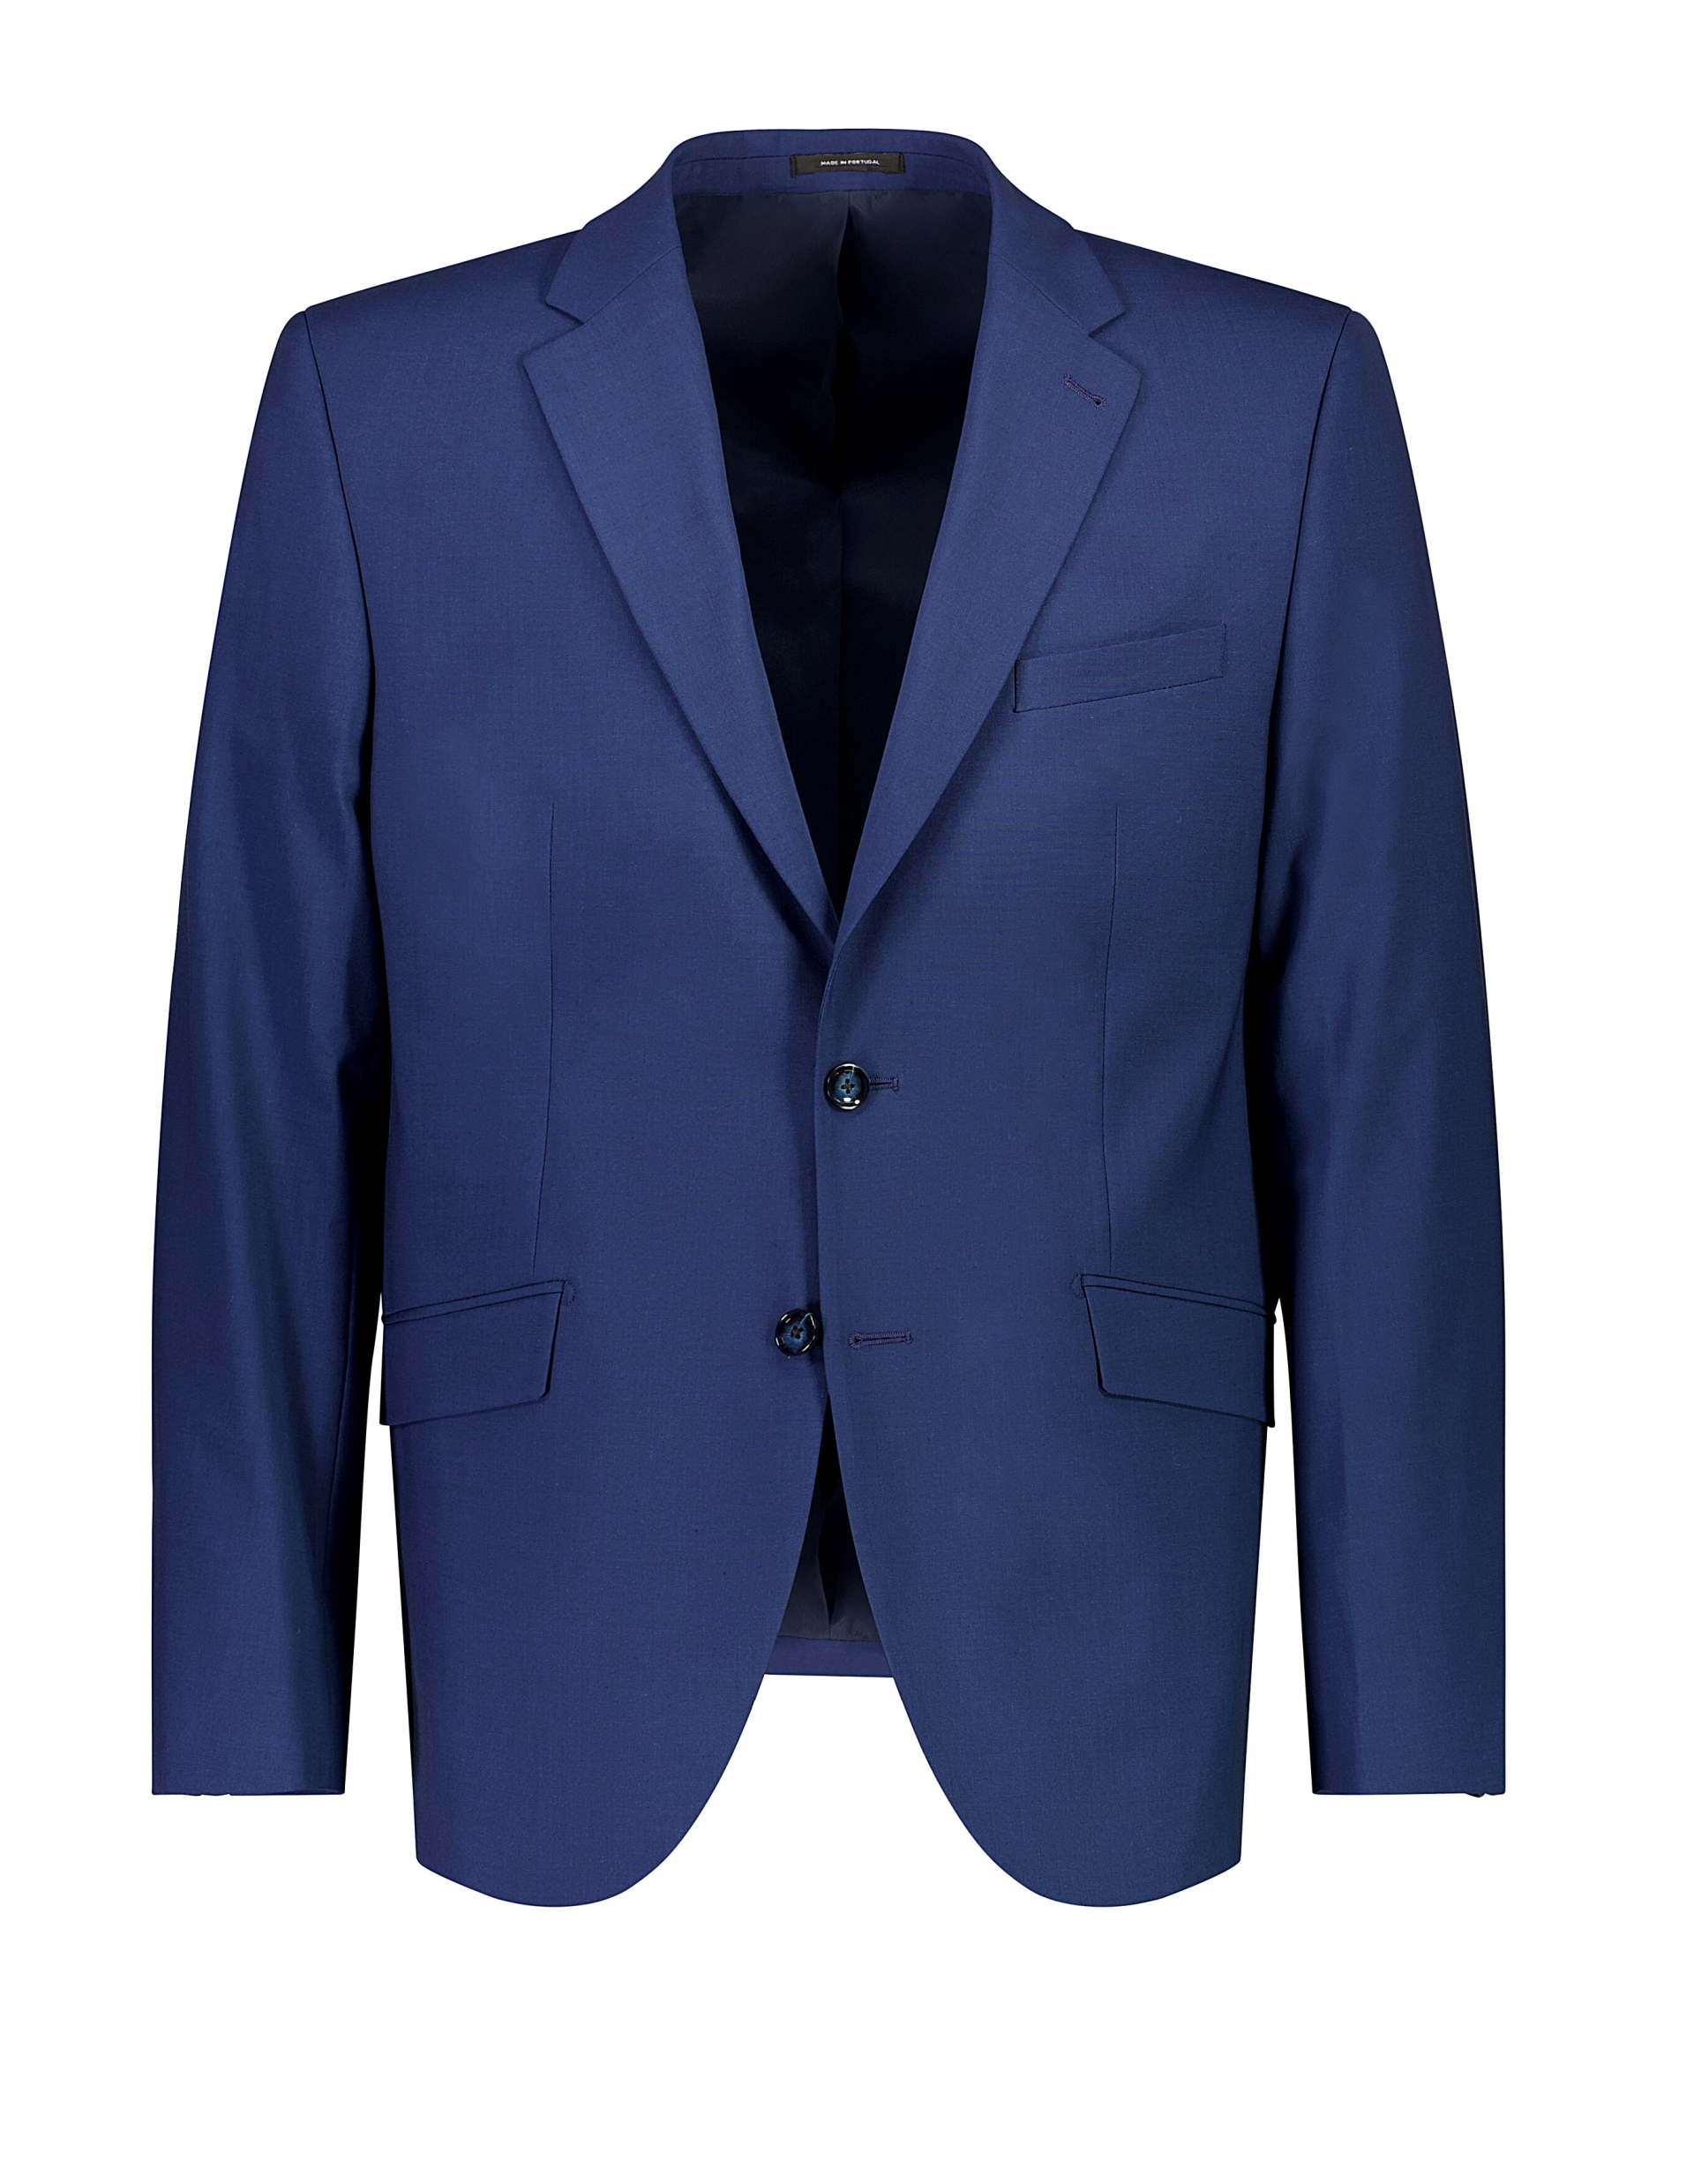 Lindbergh Suit jacket blue / mid navy